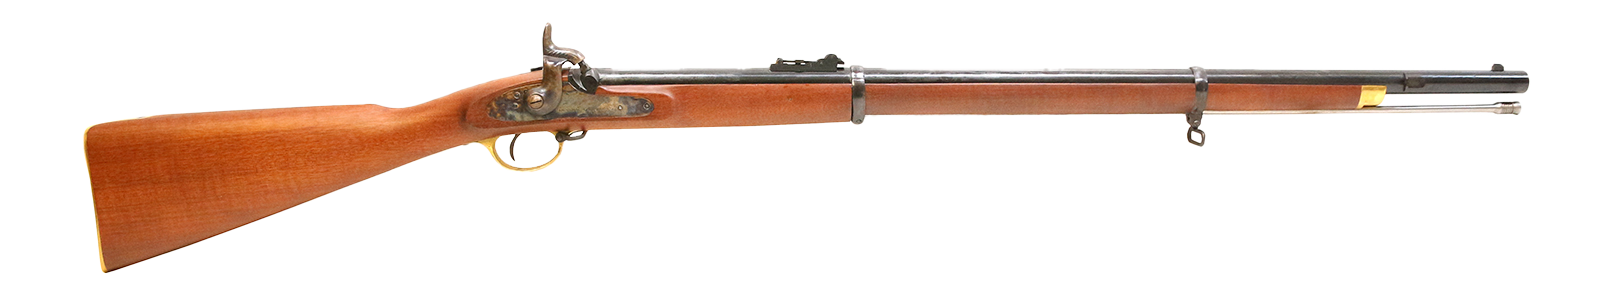 Euroarms P1853 Rifle